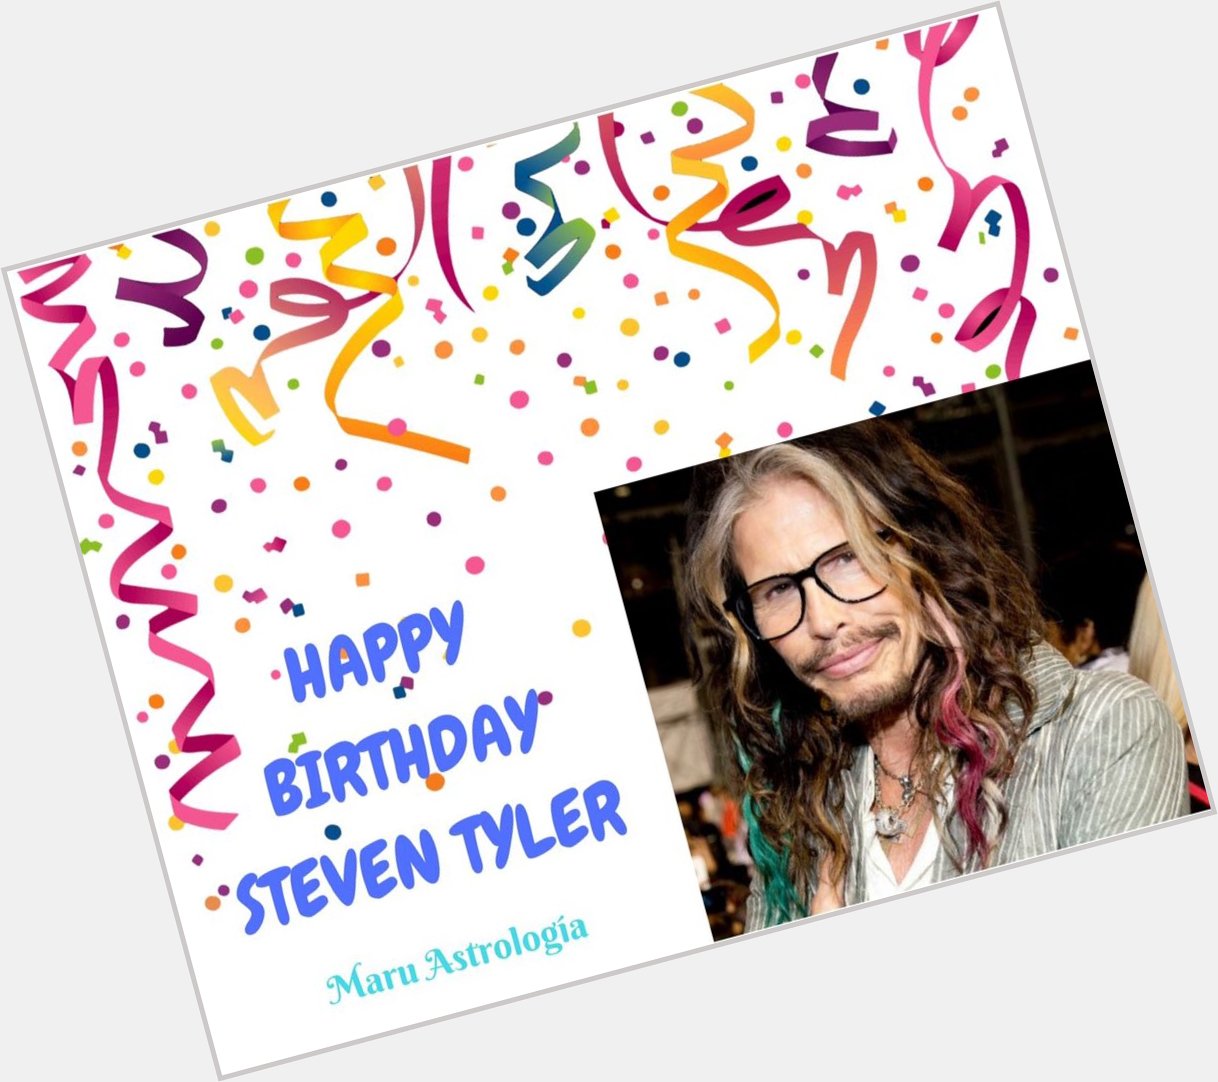 HAPPY BIRTHDAY STEVEN TYLER!!!!   